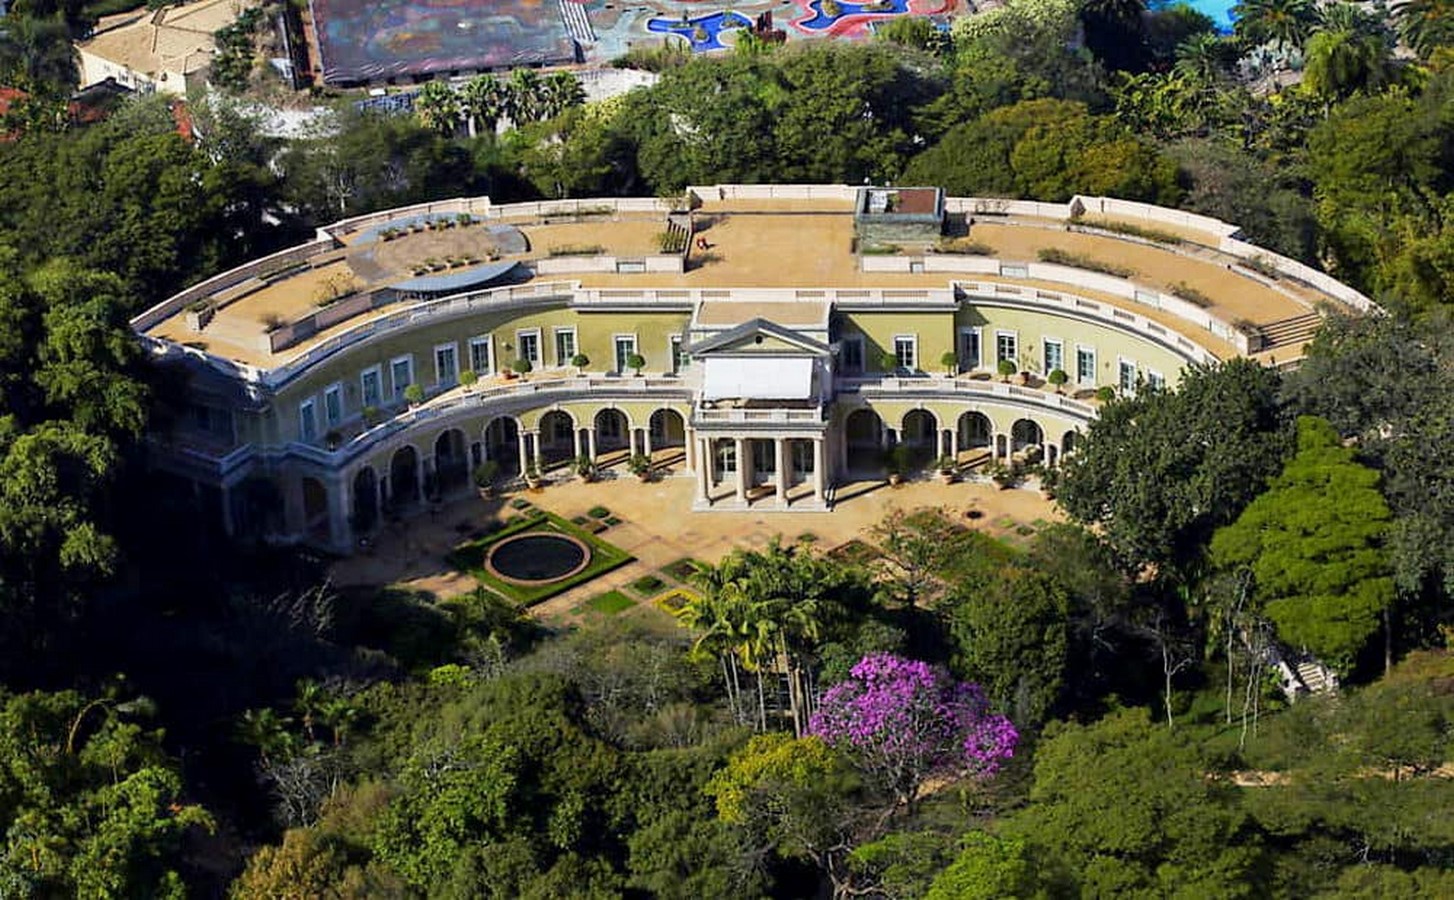 30 Biggest Houses In The World-Safra Mansion, São Paulo, Brazil